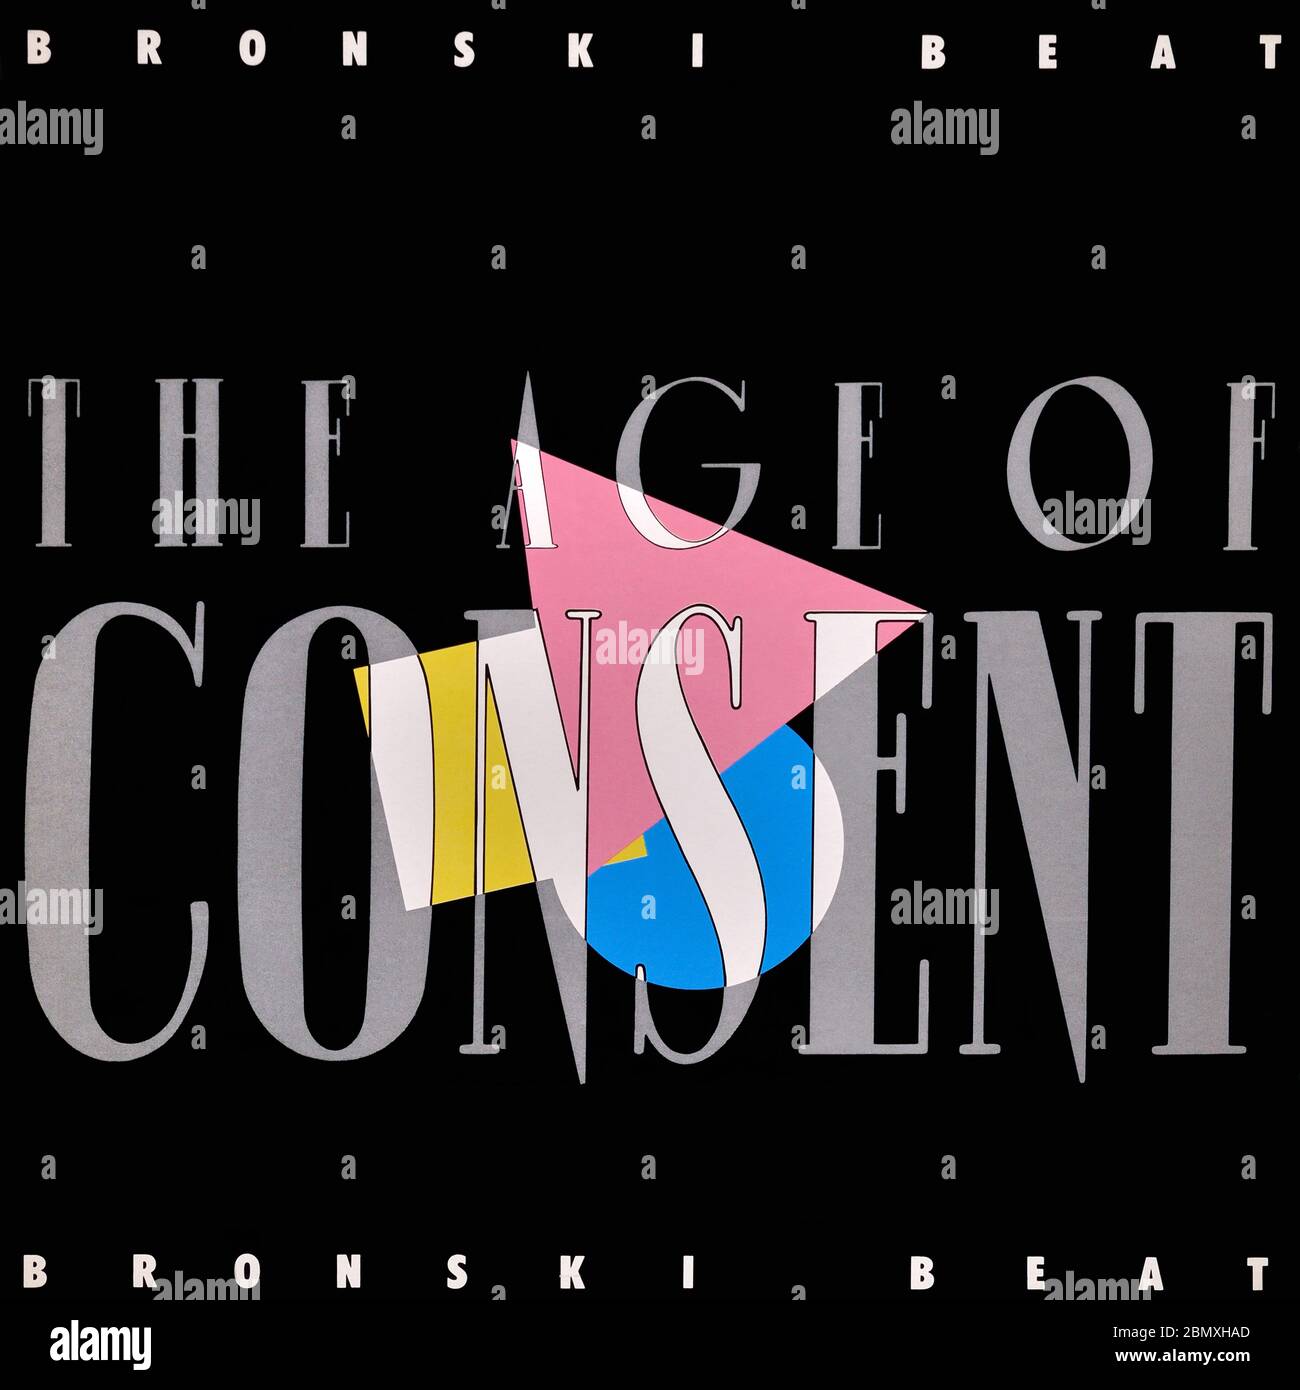 Bronski Beat - original Vinyl Album Cover - The Age of Consent - 1984 Stockfoto